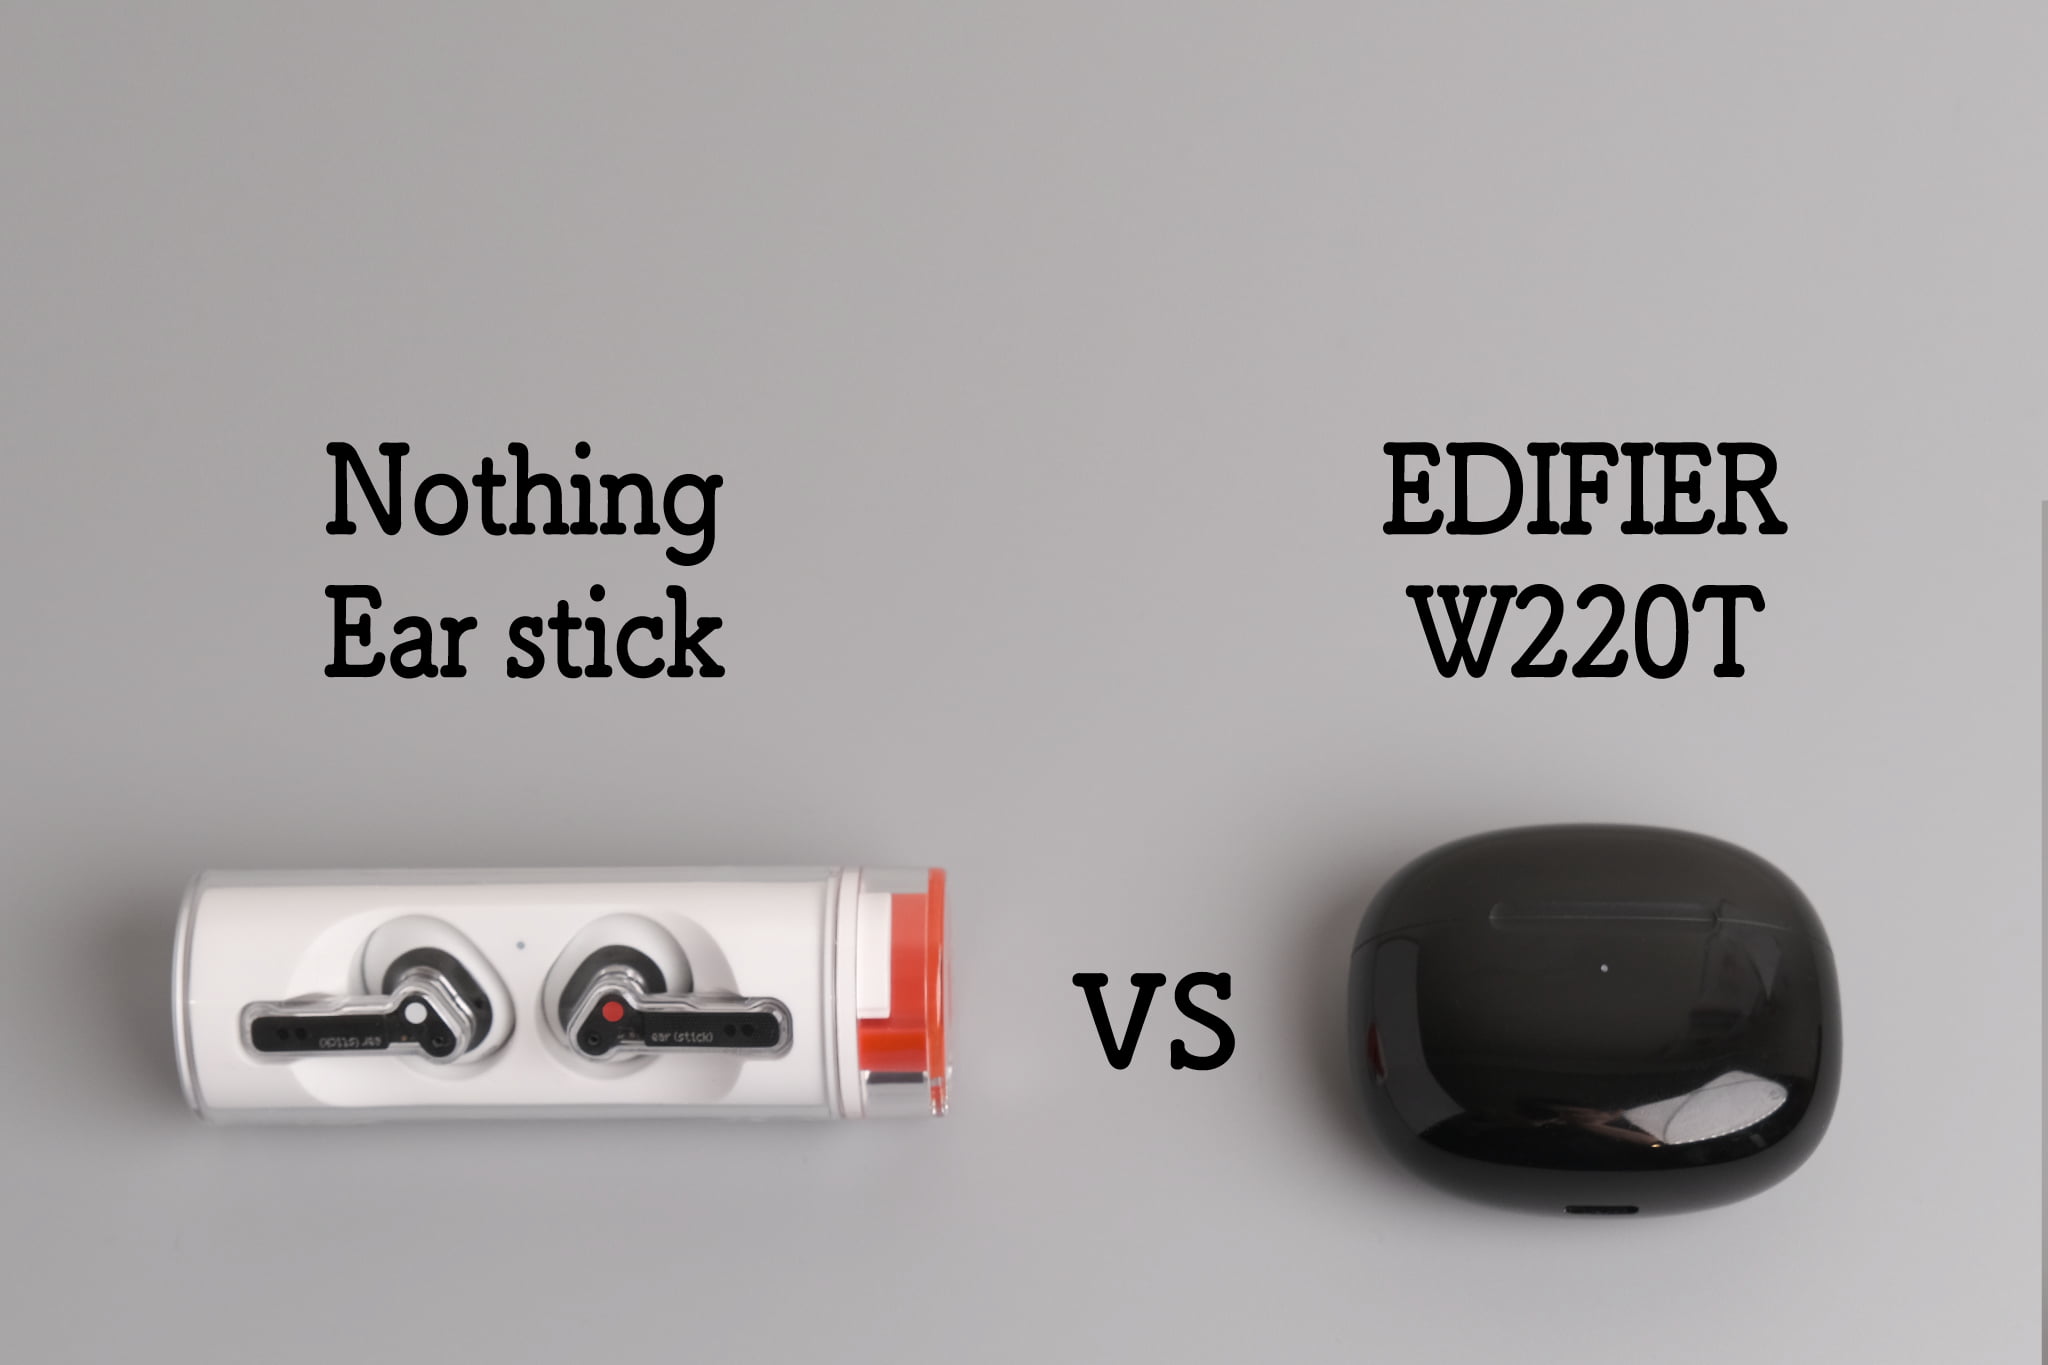 Nothing Ear stick ｜人気インナーイヤー型イヤホンとの比較｜EDIFIER W220T